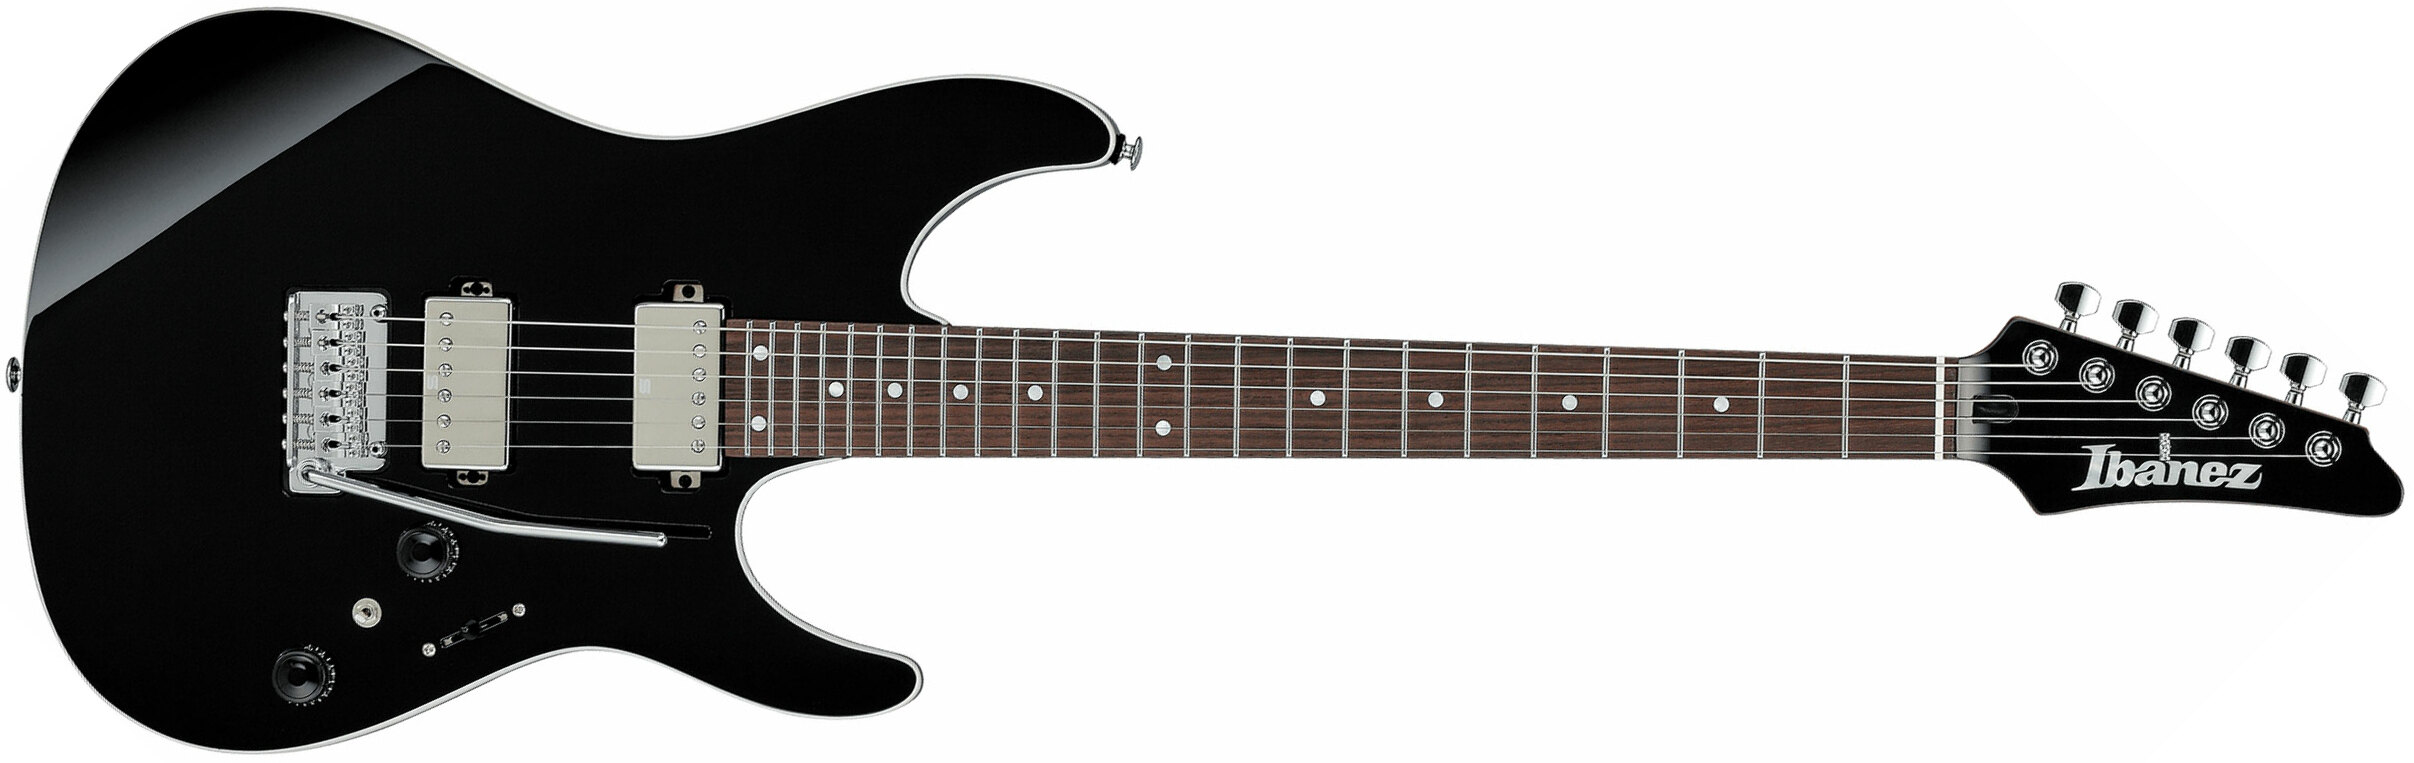 Ibanez Az42p1 Bk  Premium 2h Seymour Duncan Trem Rw - Black - Elektrische gitaar in Str-vorm - Main picture